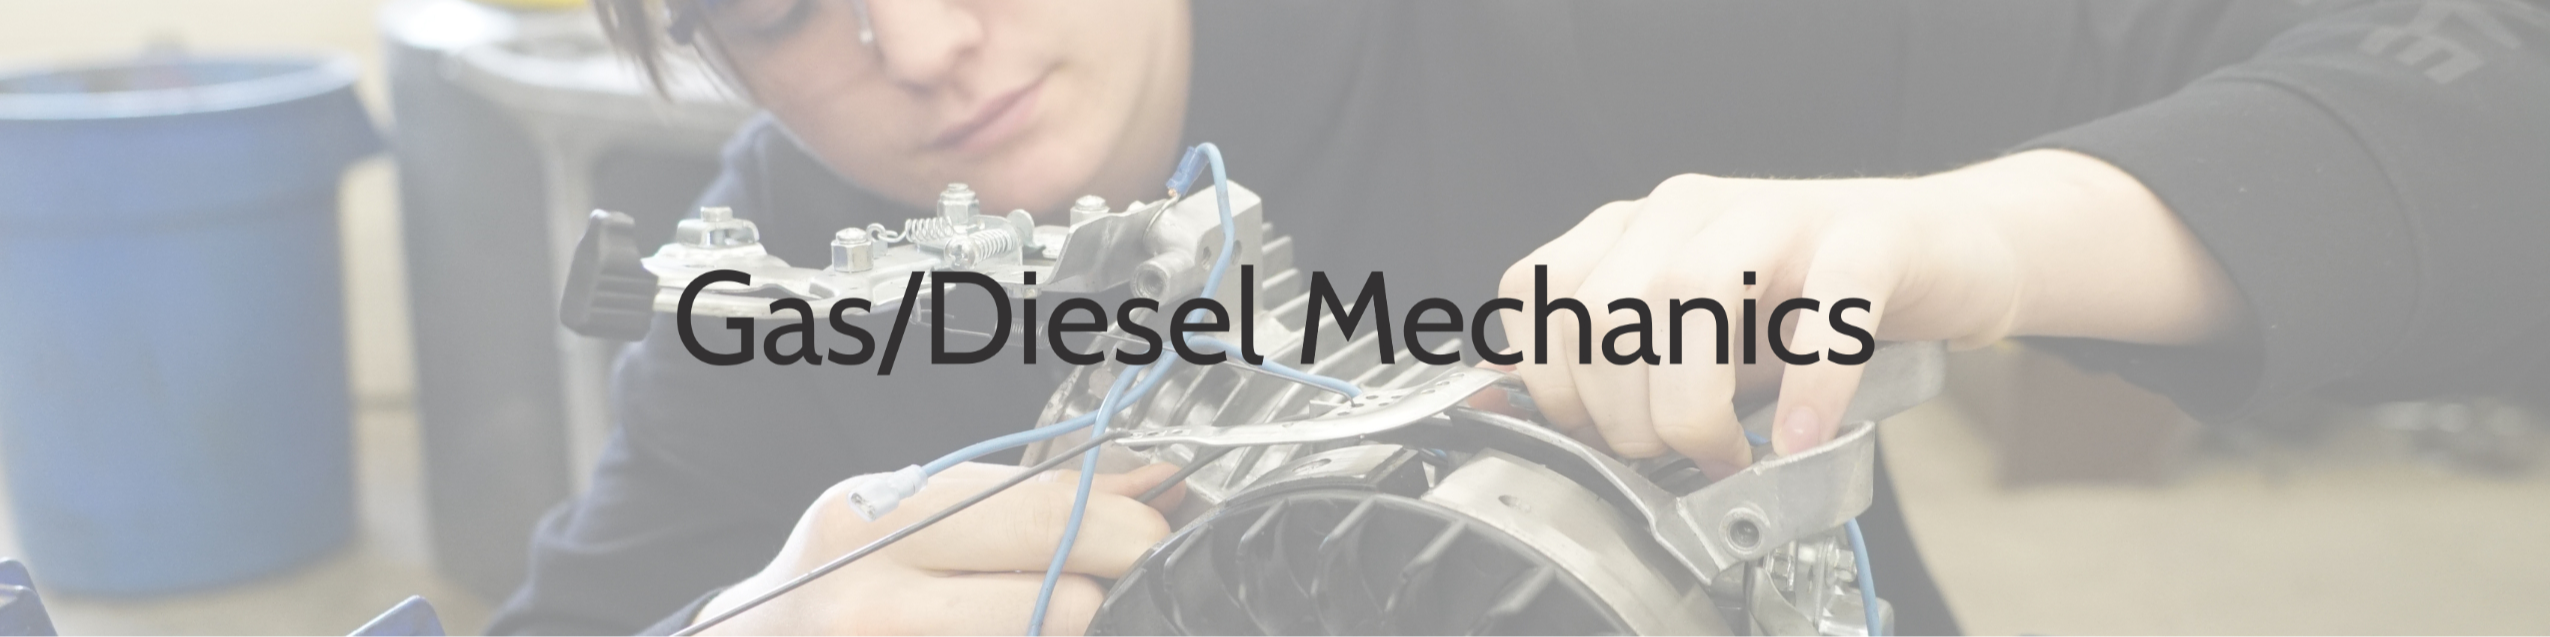 Gas/Diesel Mechanics header